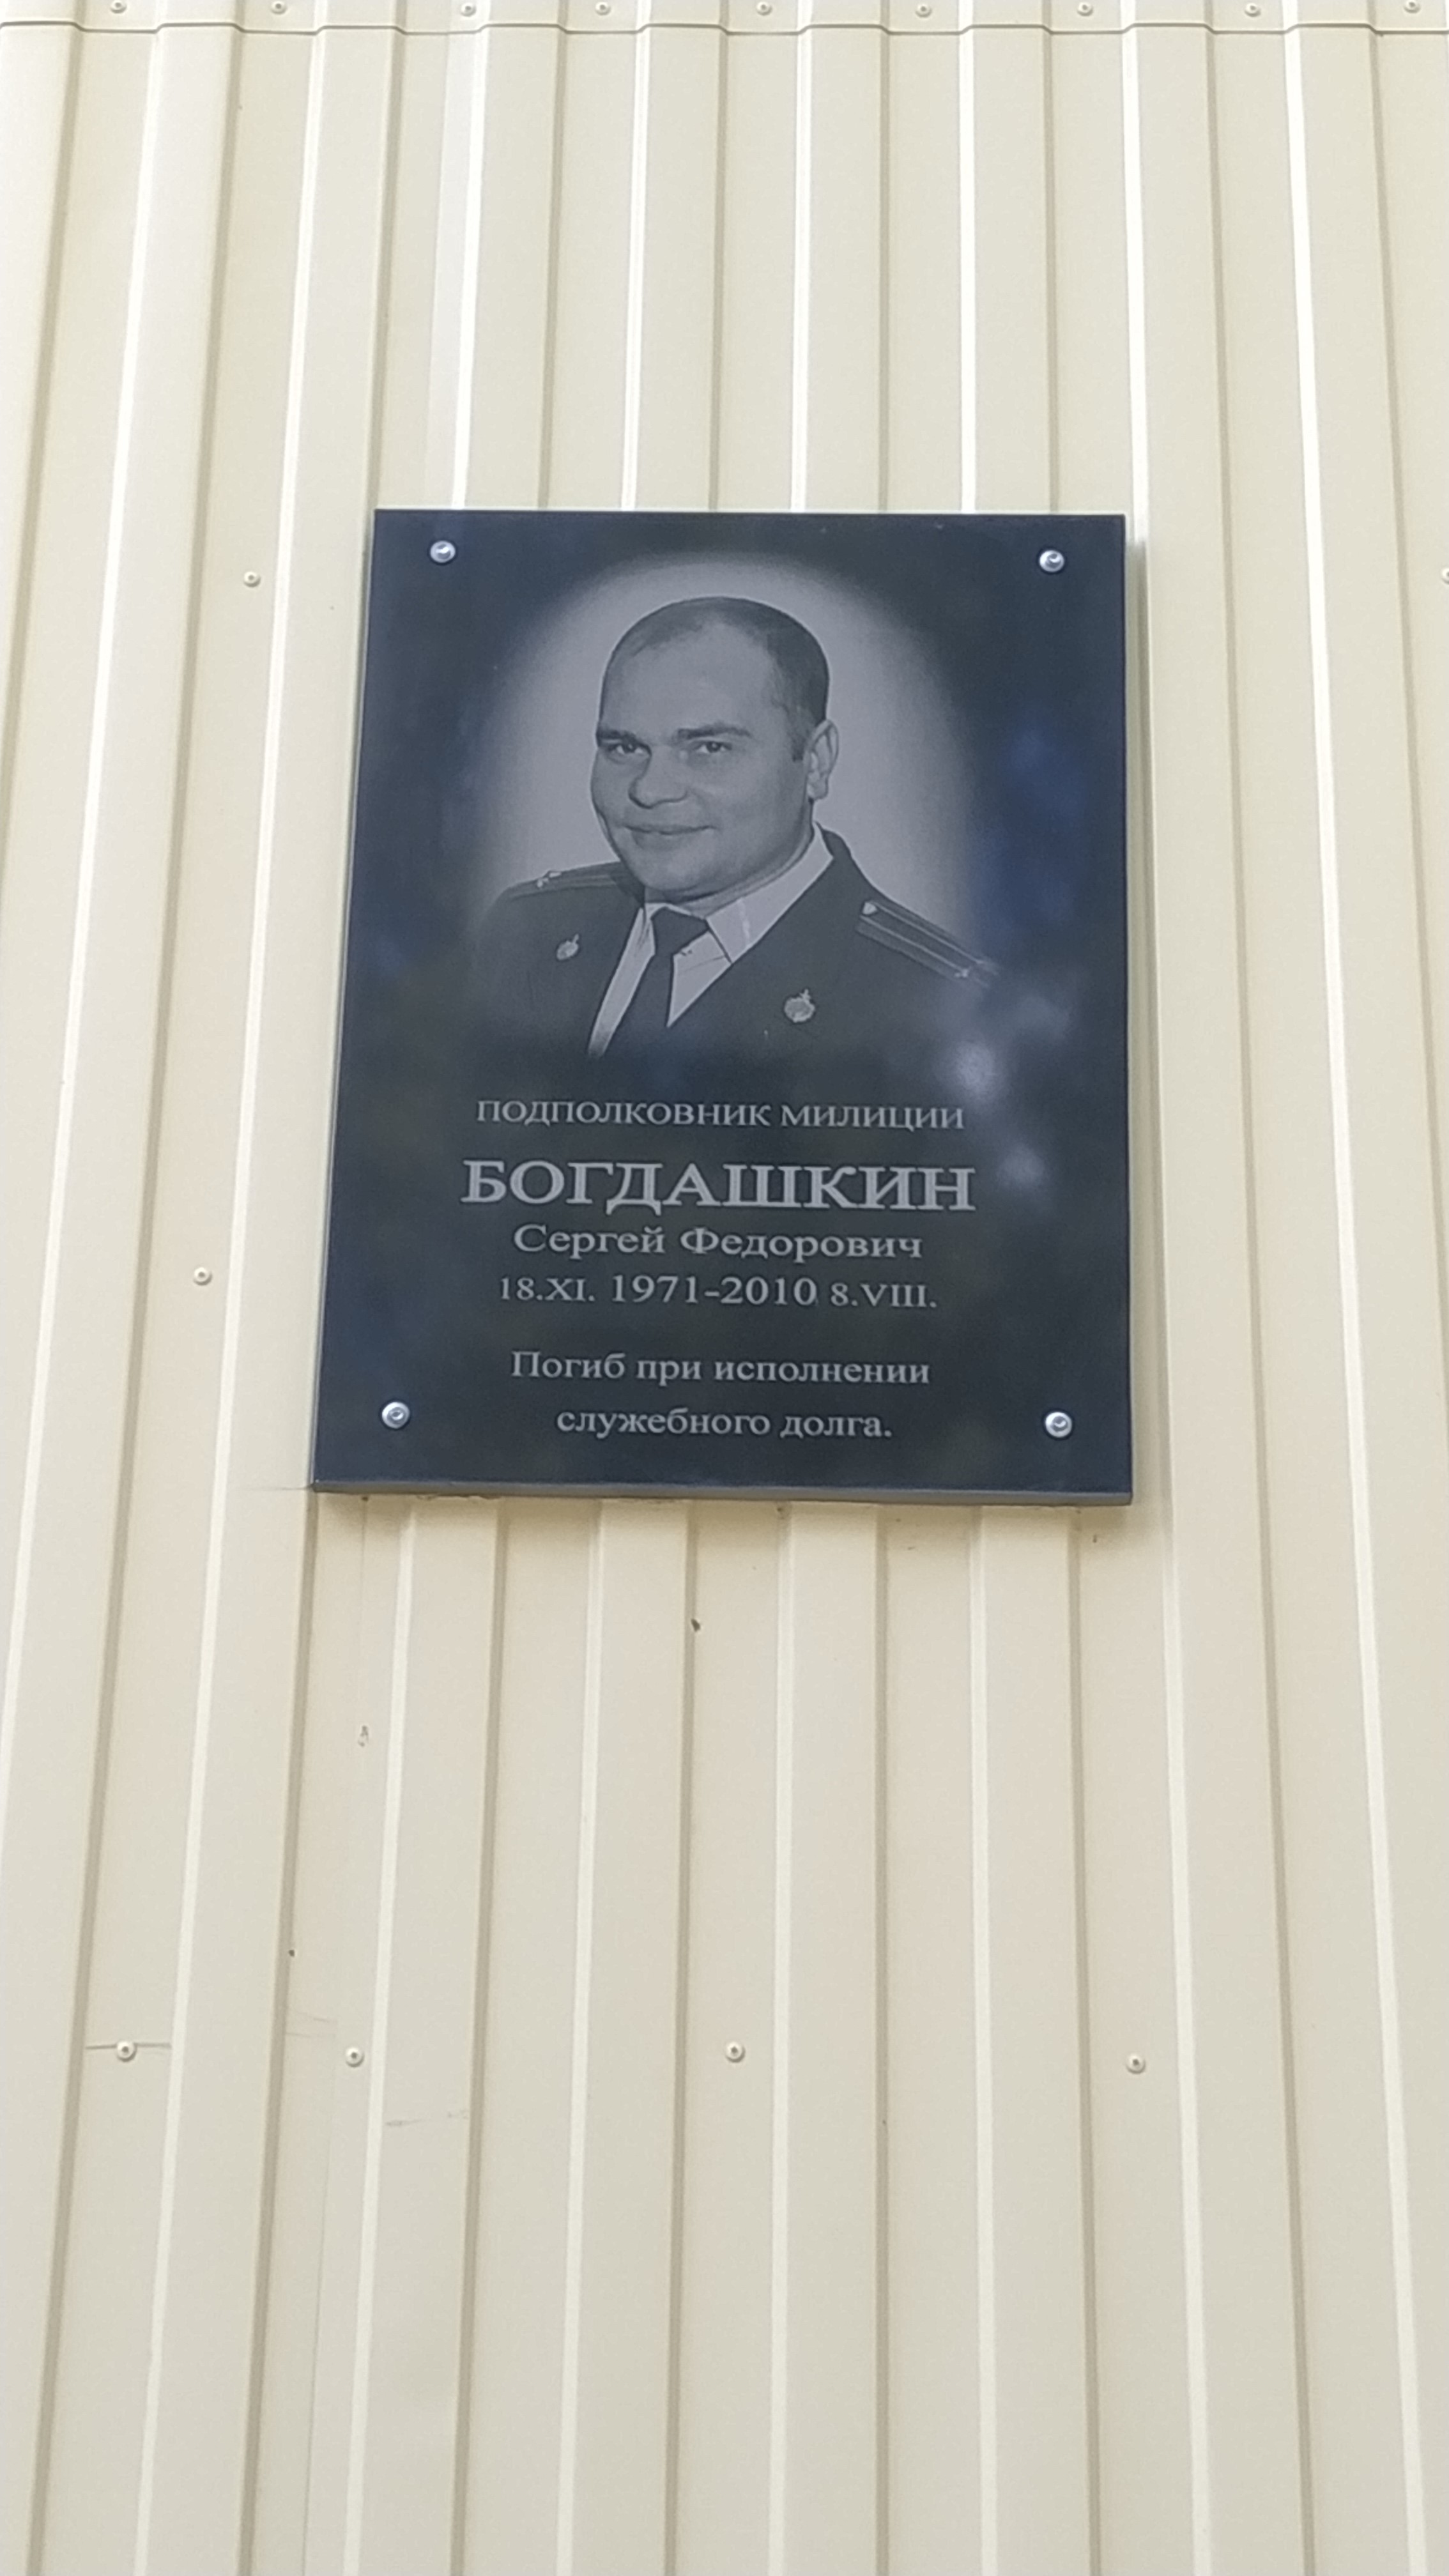 Богдашкину Сергею Федоровичу.